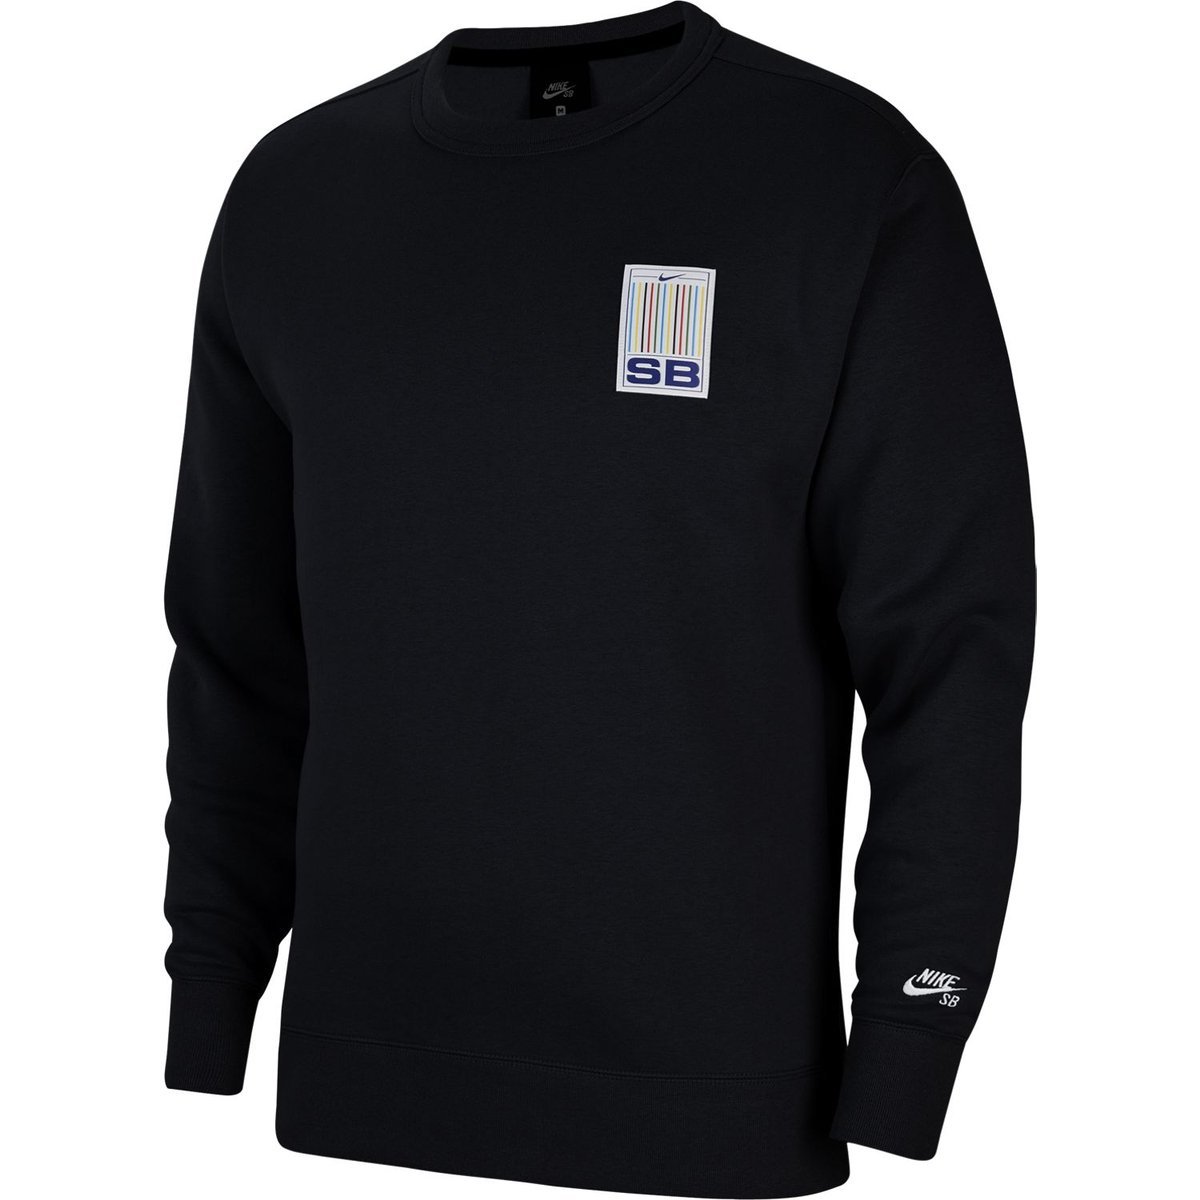 Nike Sb Striped Skate Crew BLACK | SALE \ Sale 50% -70% \ Sweatshirts ...